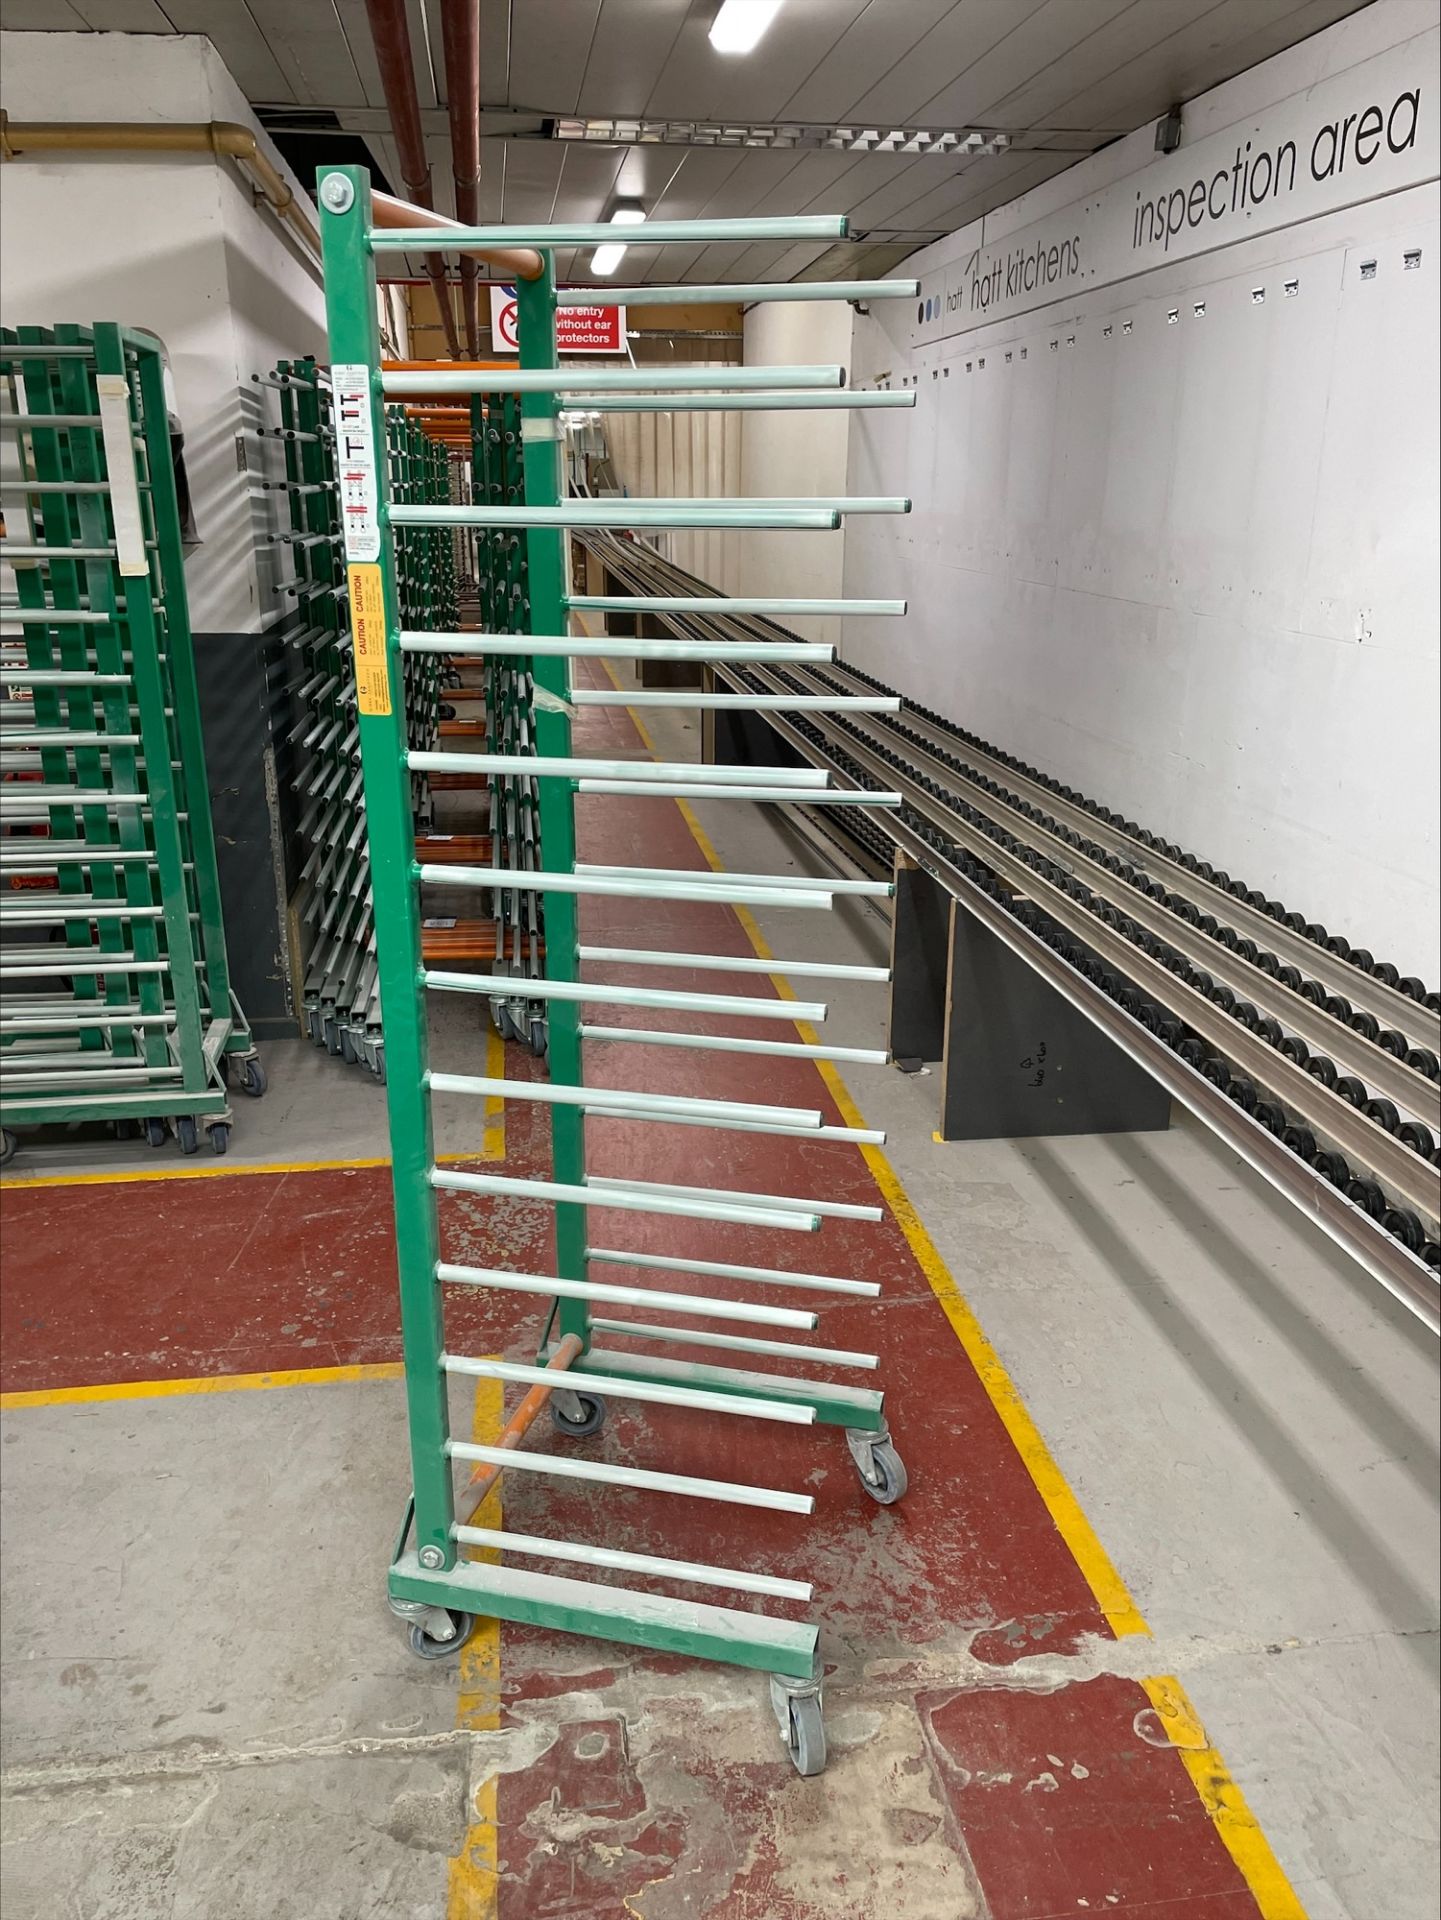 5x Gibbs Sandtech 13 bar standard spray drying racks, 13 bars per upright, max. load per pair of